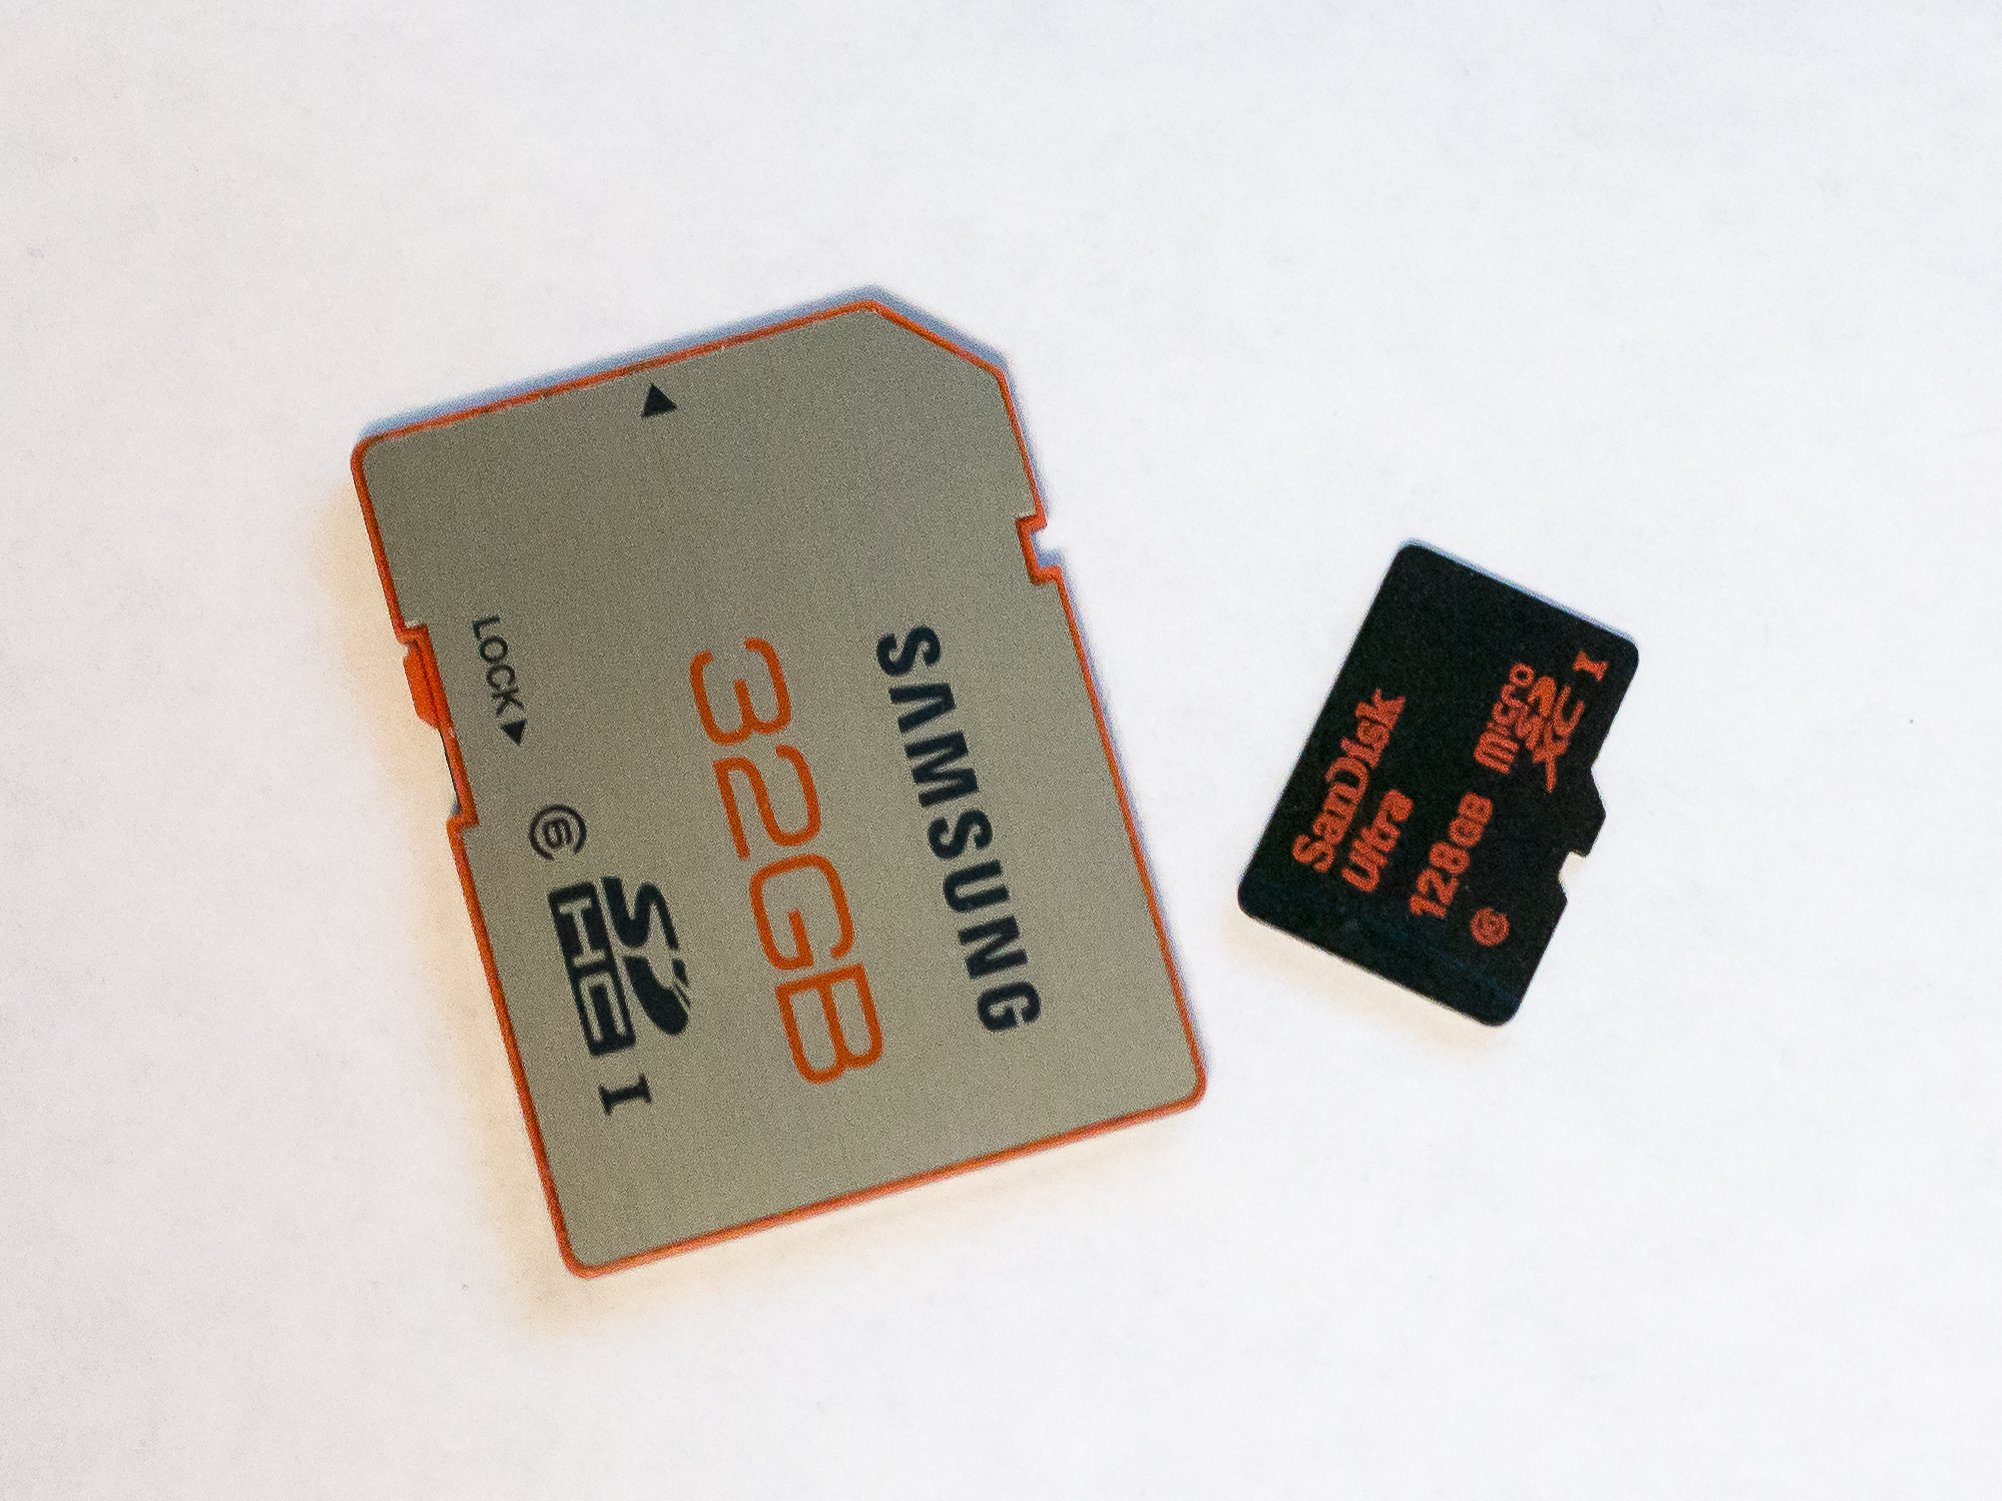 SD card sizes